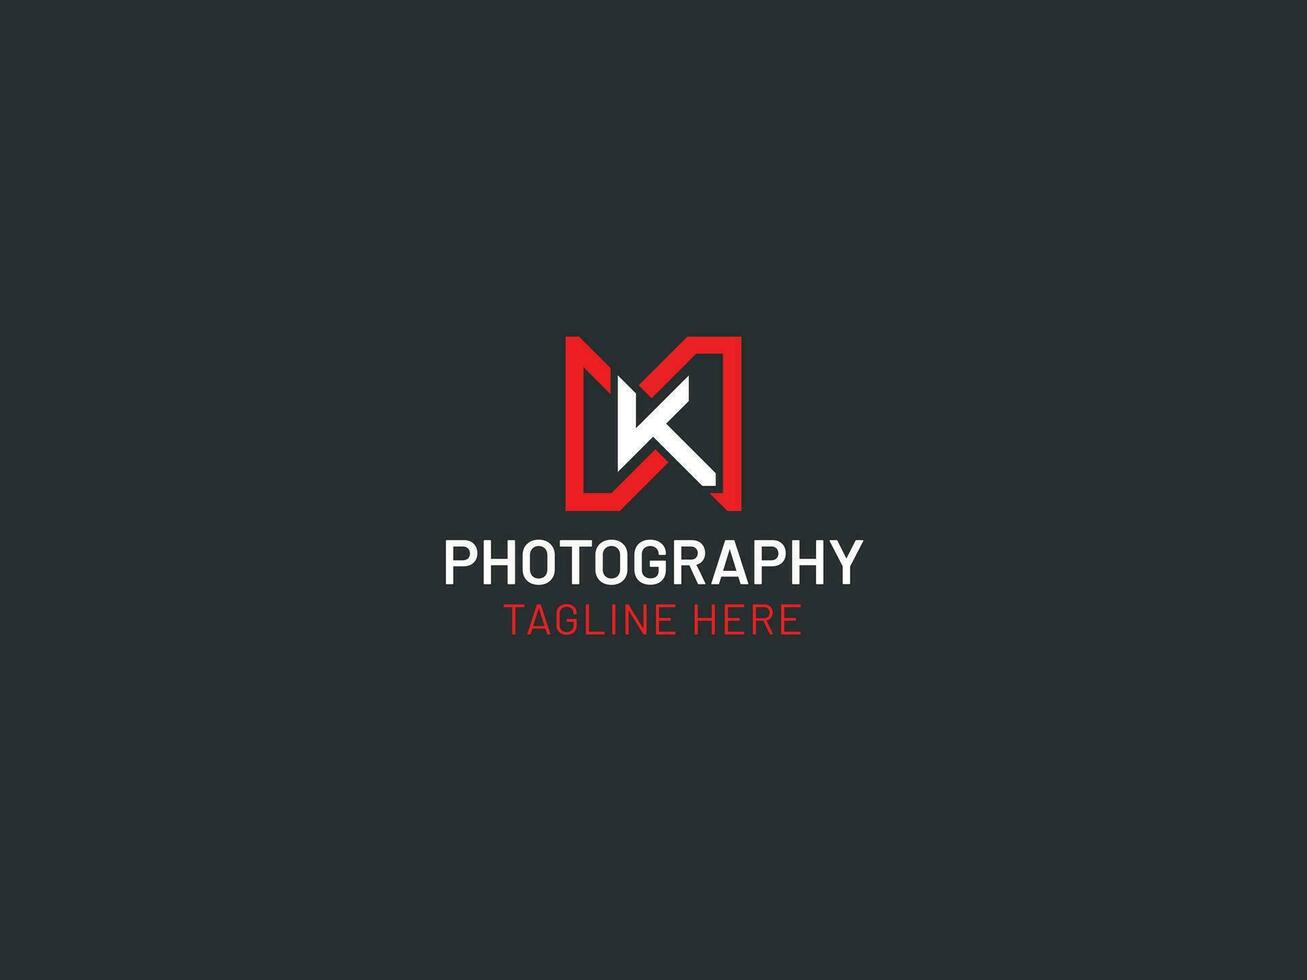 fotografia logotipo com k carta vetor